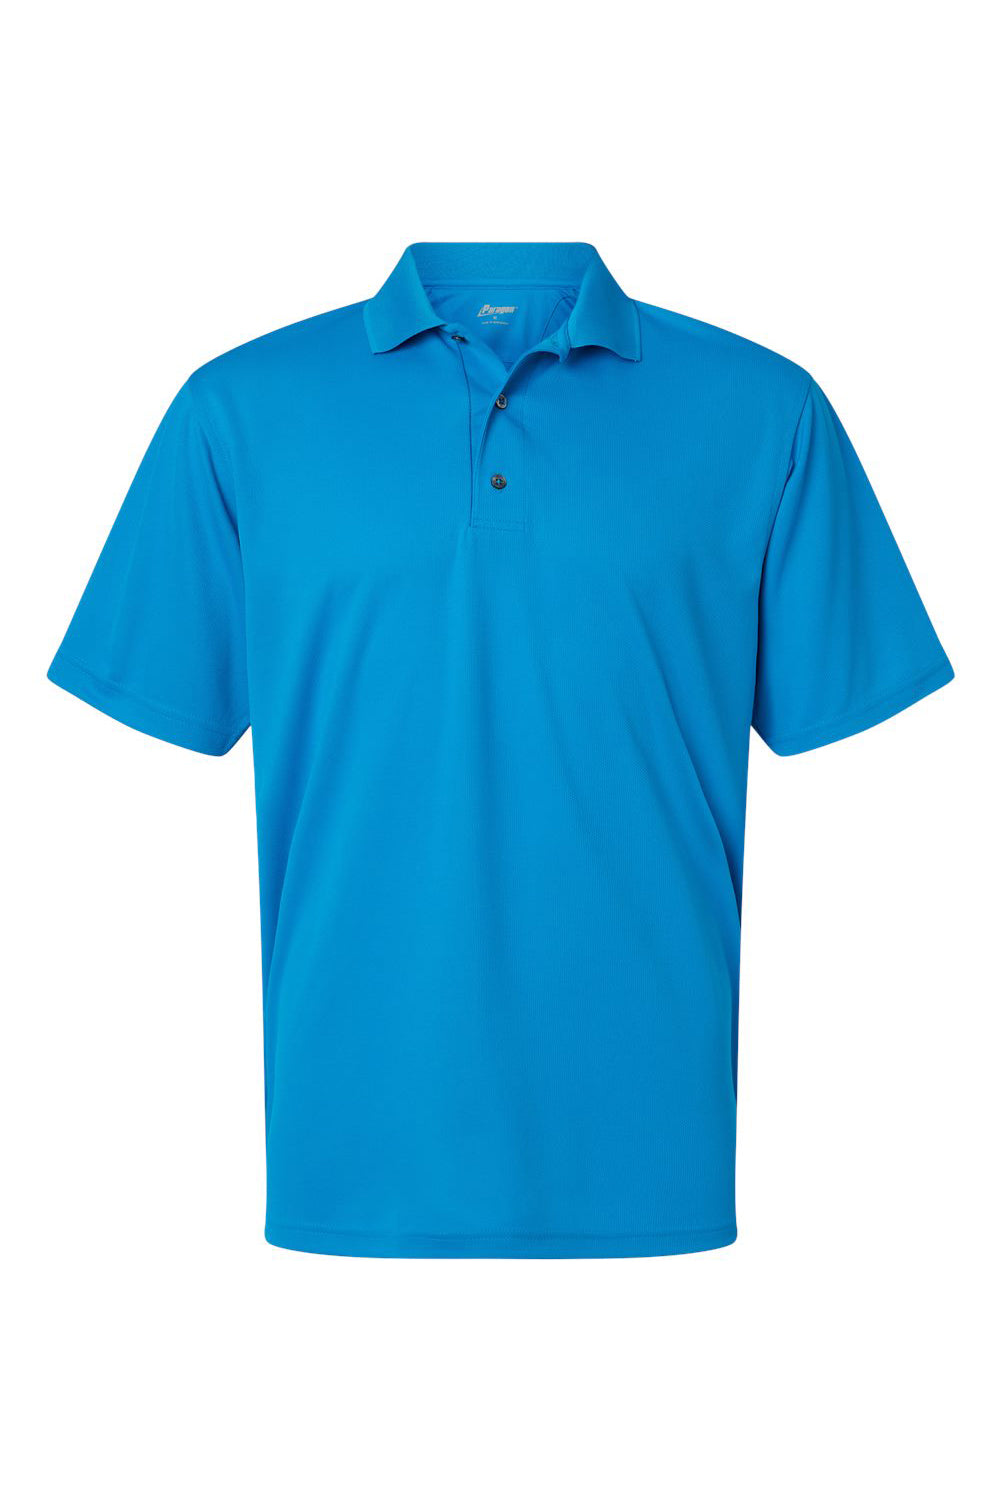 Paragon 100 Mens Saratoga Performance Mini Mesh Short Sleeve Polo Shirt Turquoise Blue Flat Front